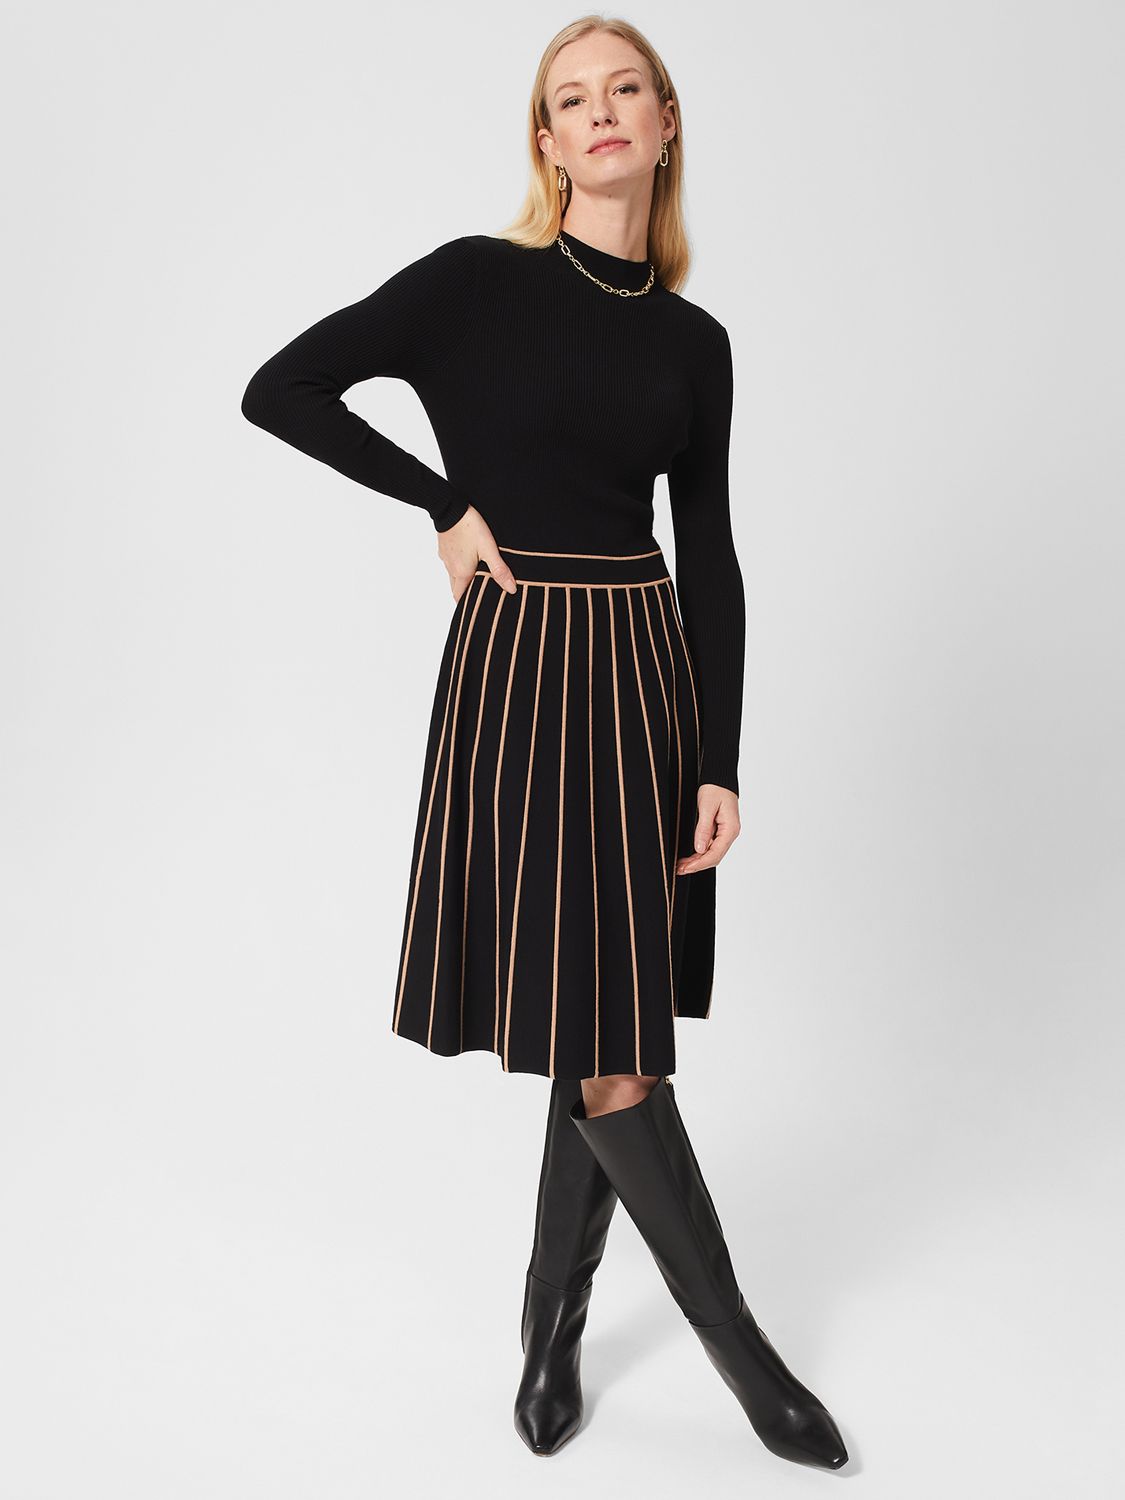 Hobbs Petite Lena Knee Length Dress, Black Stone/Multi, 20